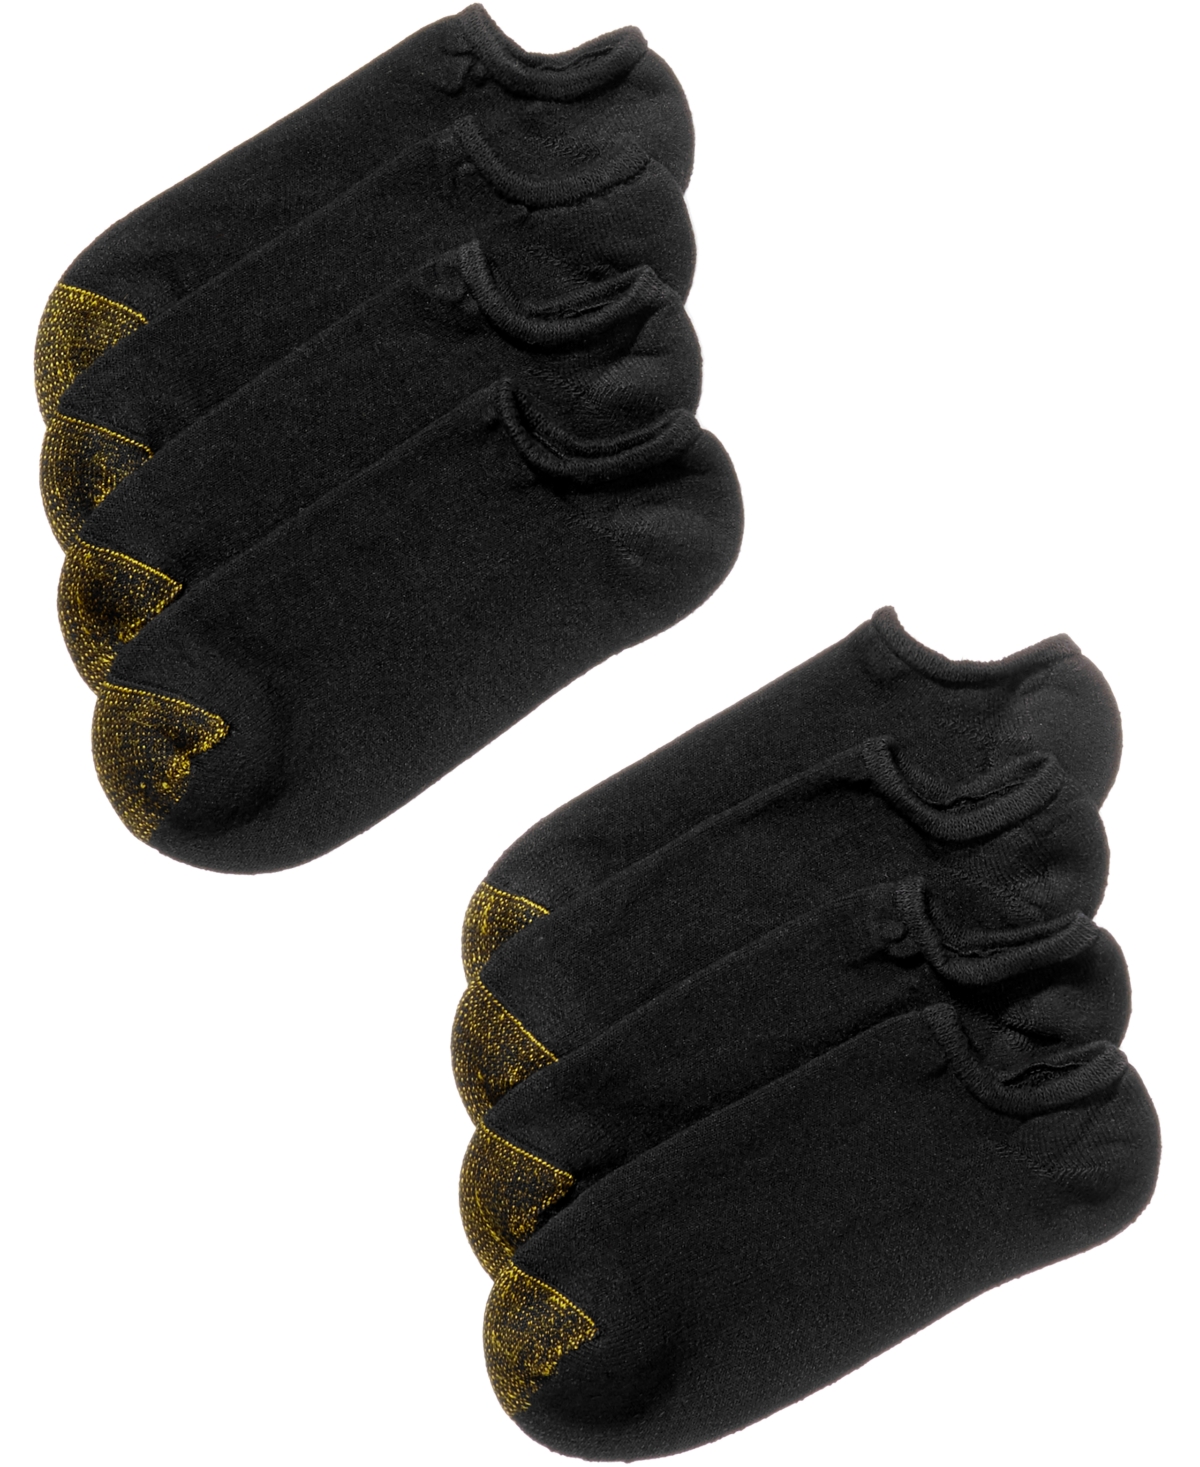 Men's 8-Pack Athletic No-Show Socks - Black